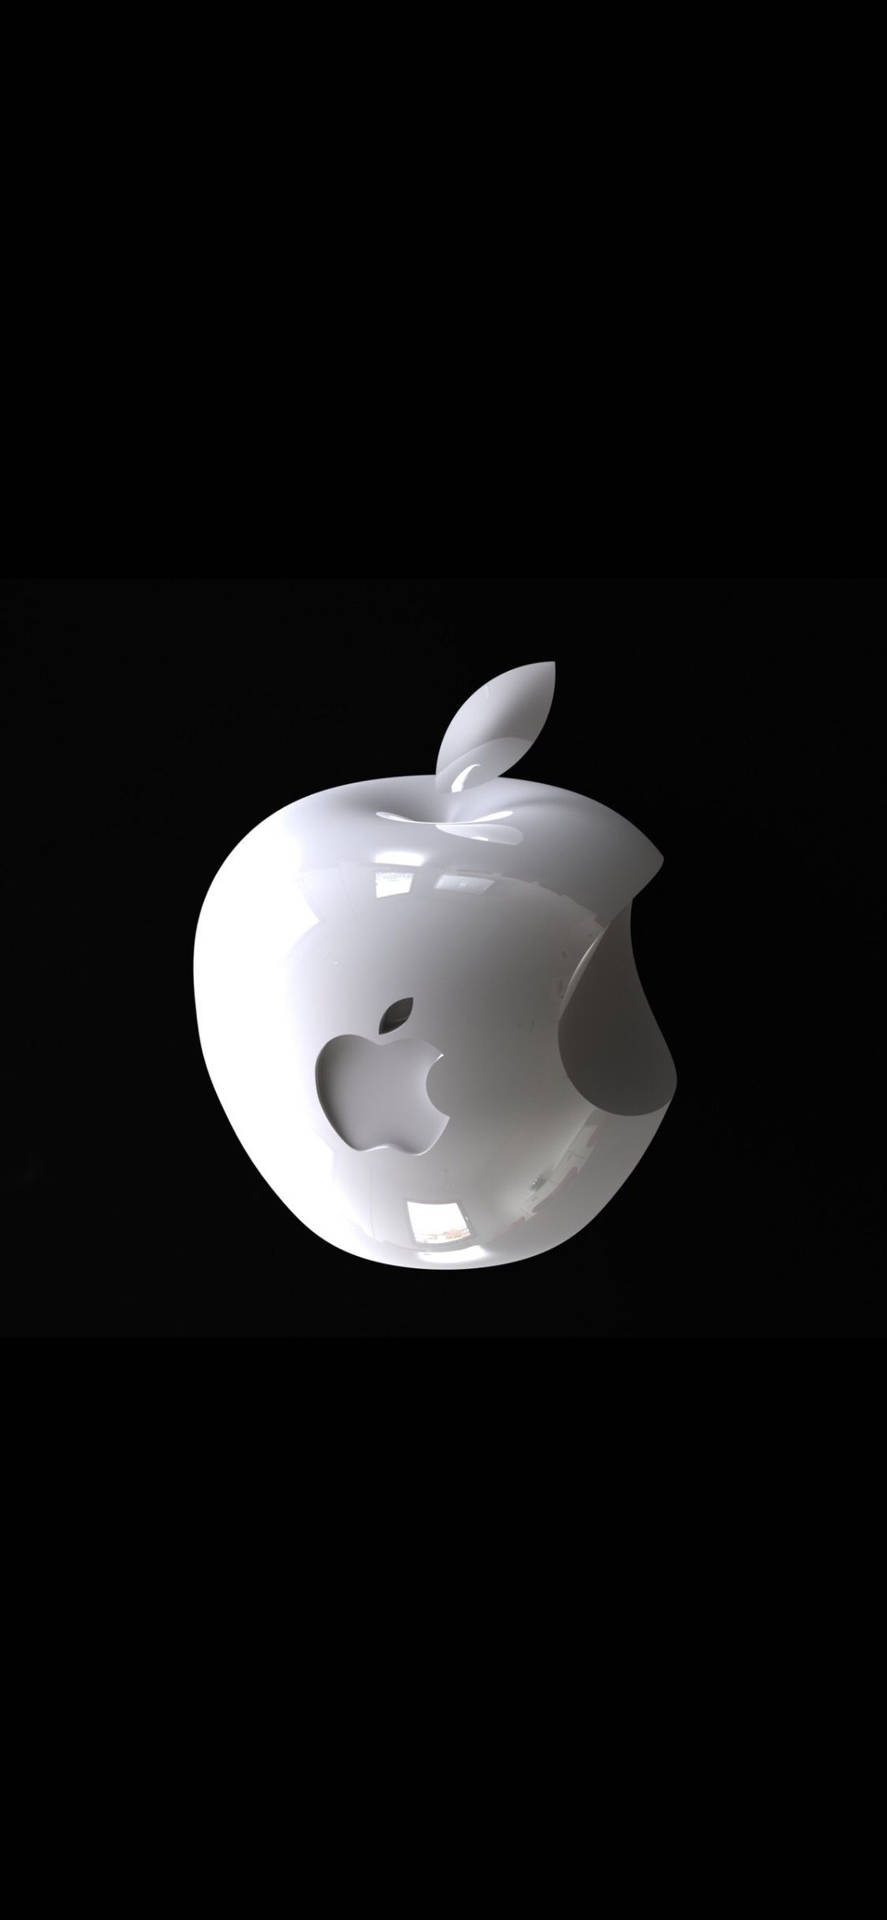 3d Apple Iphone Logo On Apple Background